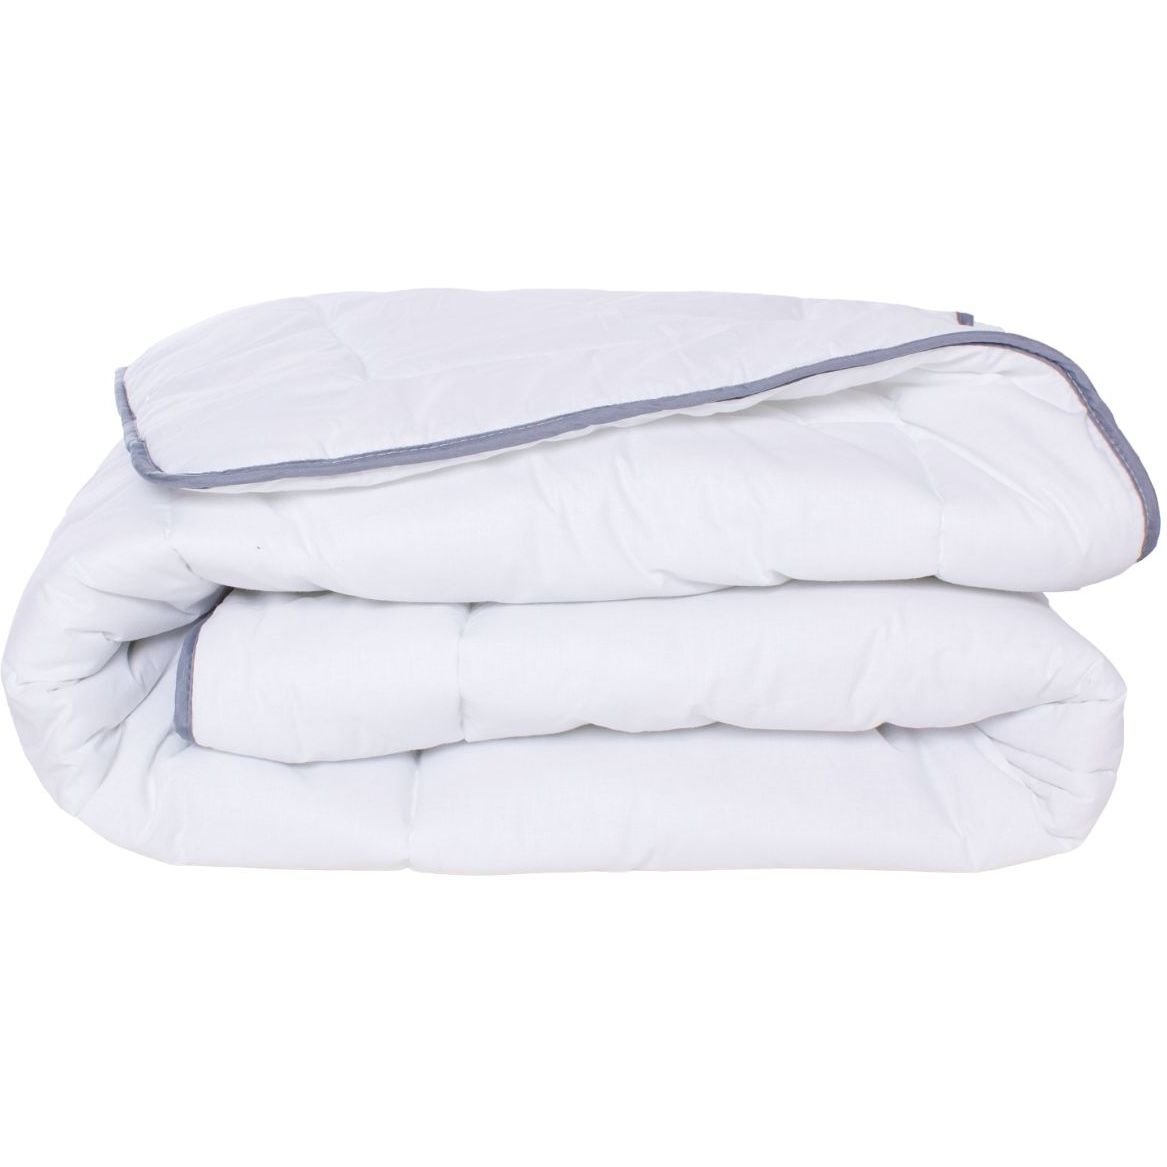 Одеяло шерстяное MirSon Royal №027, зимнее, 220x240 см, белое - фото 1